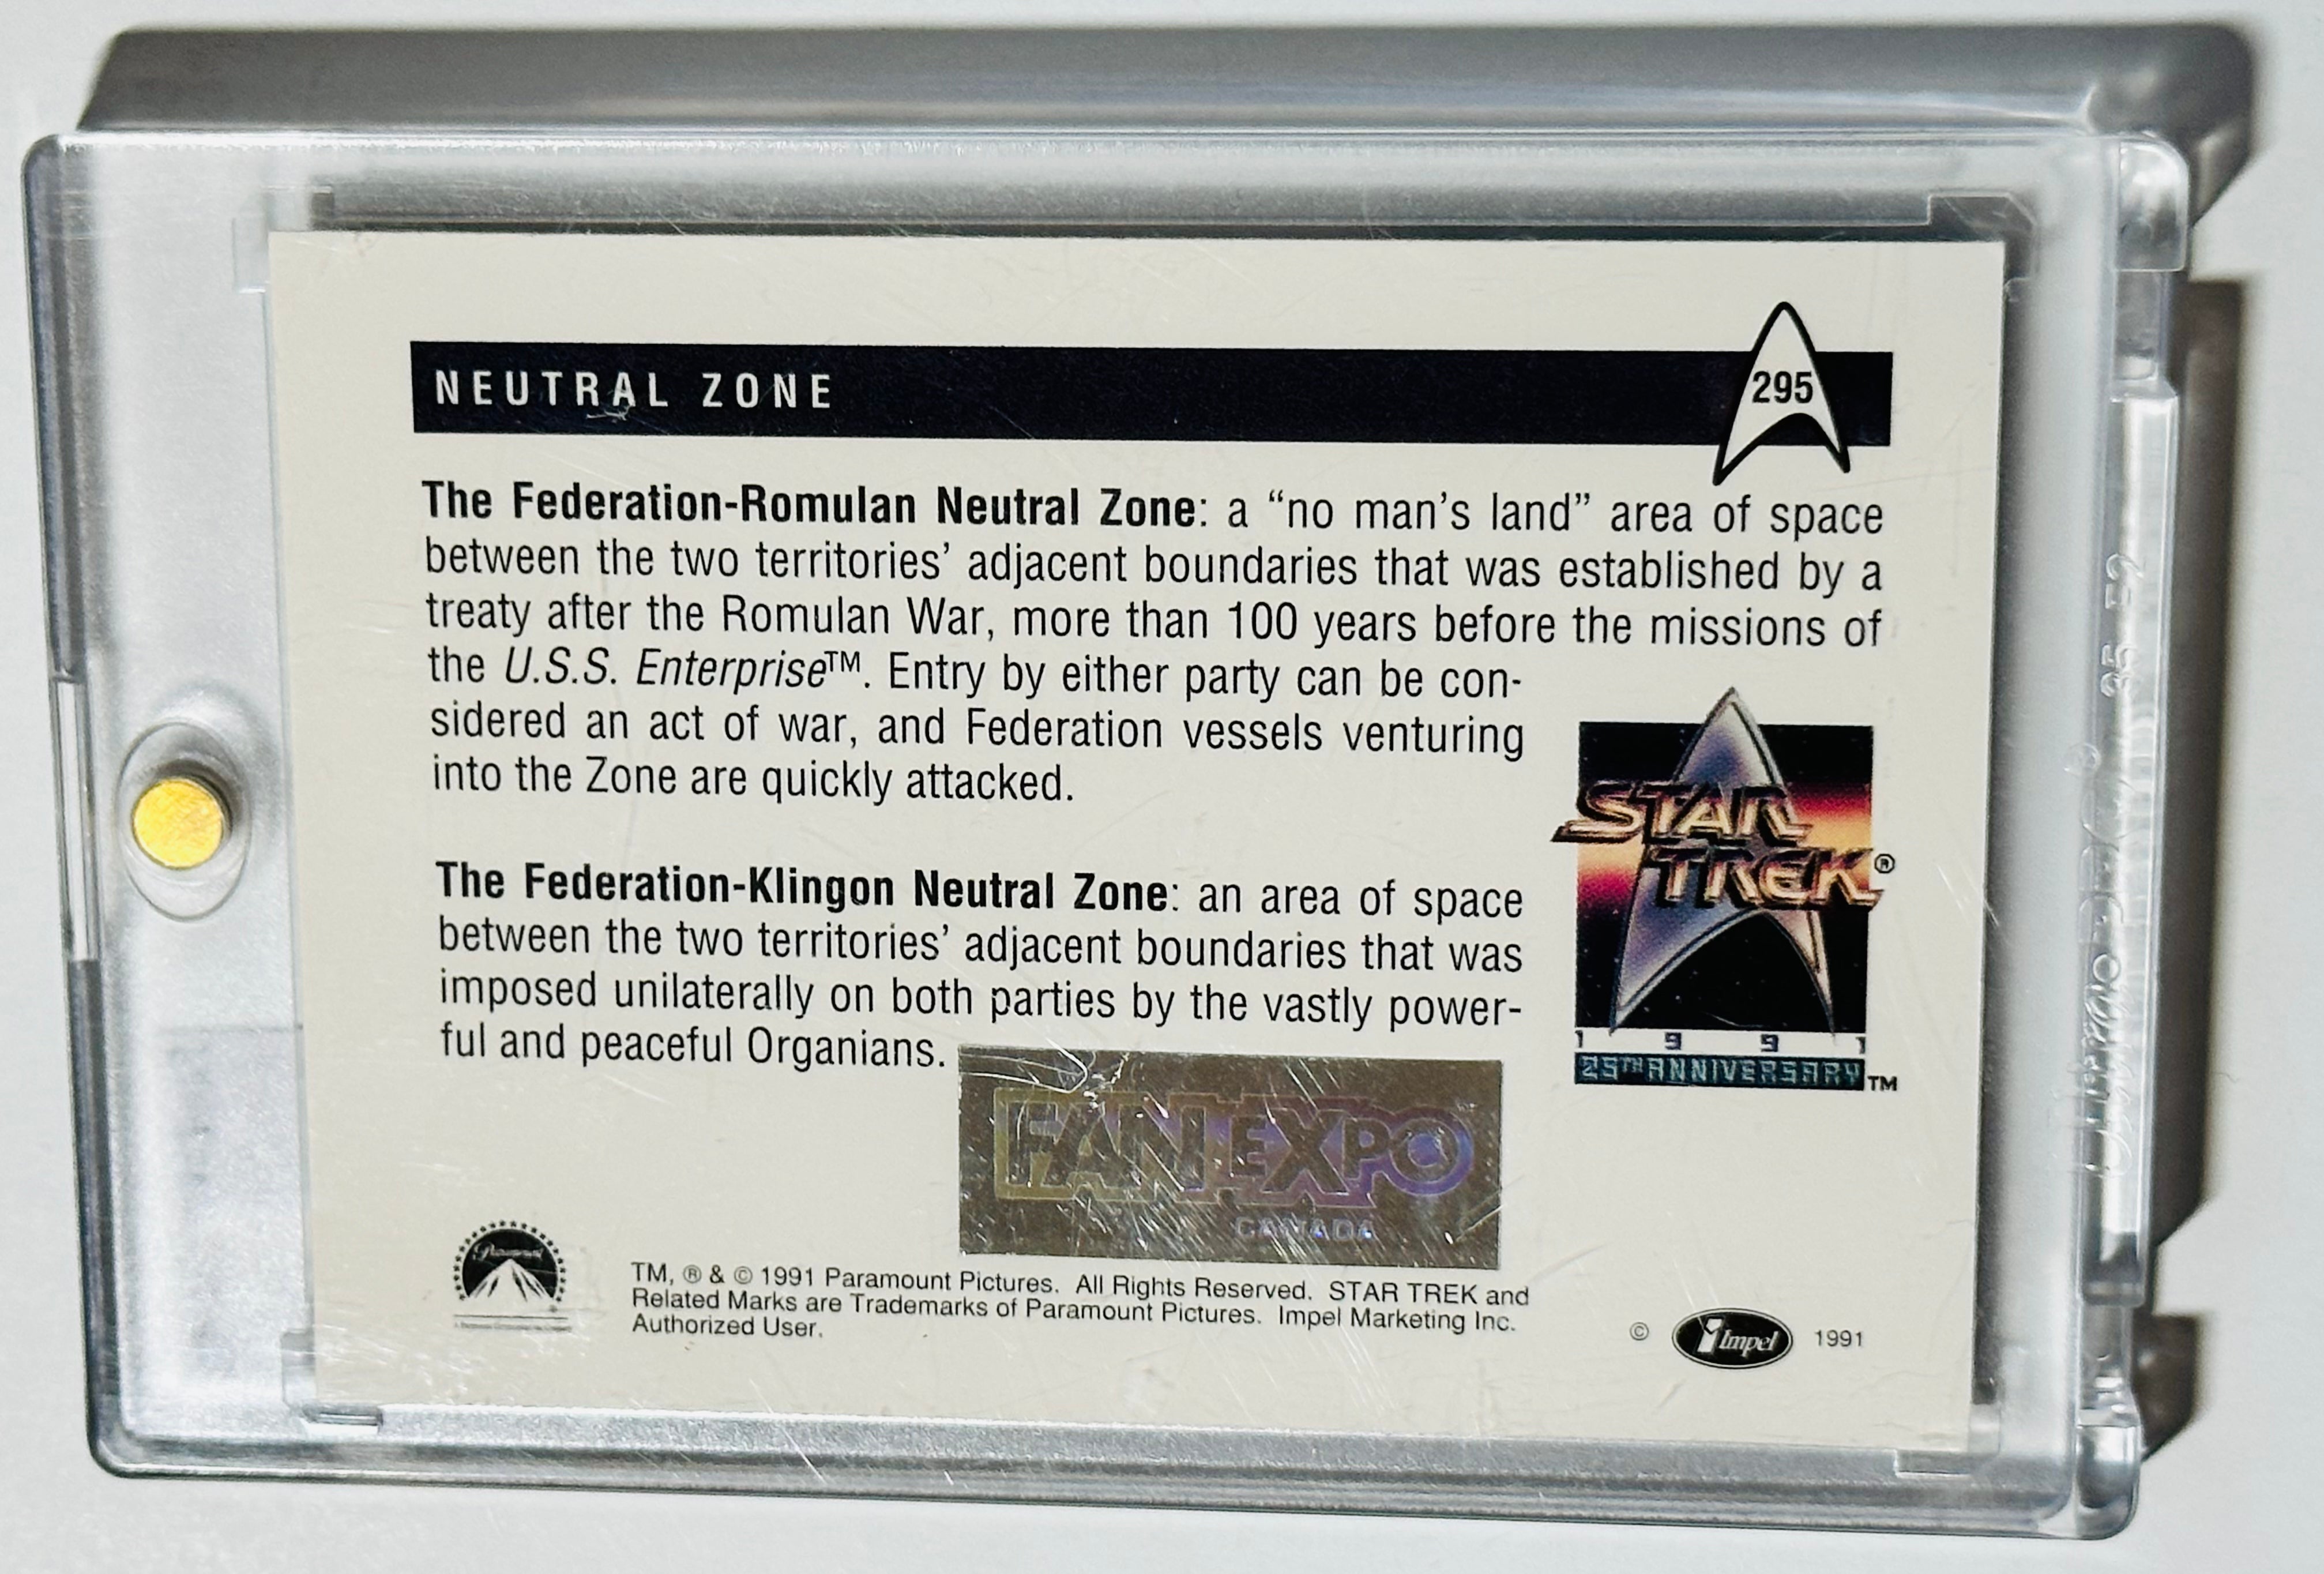 Star Trek Leonard Nimoy rare autograph card certified by Fanexpo